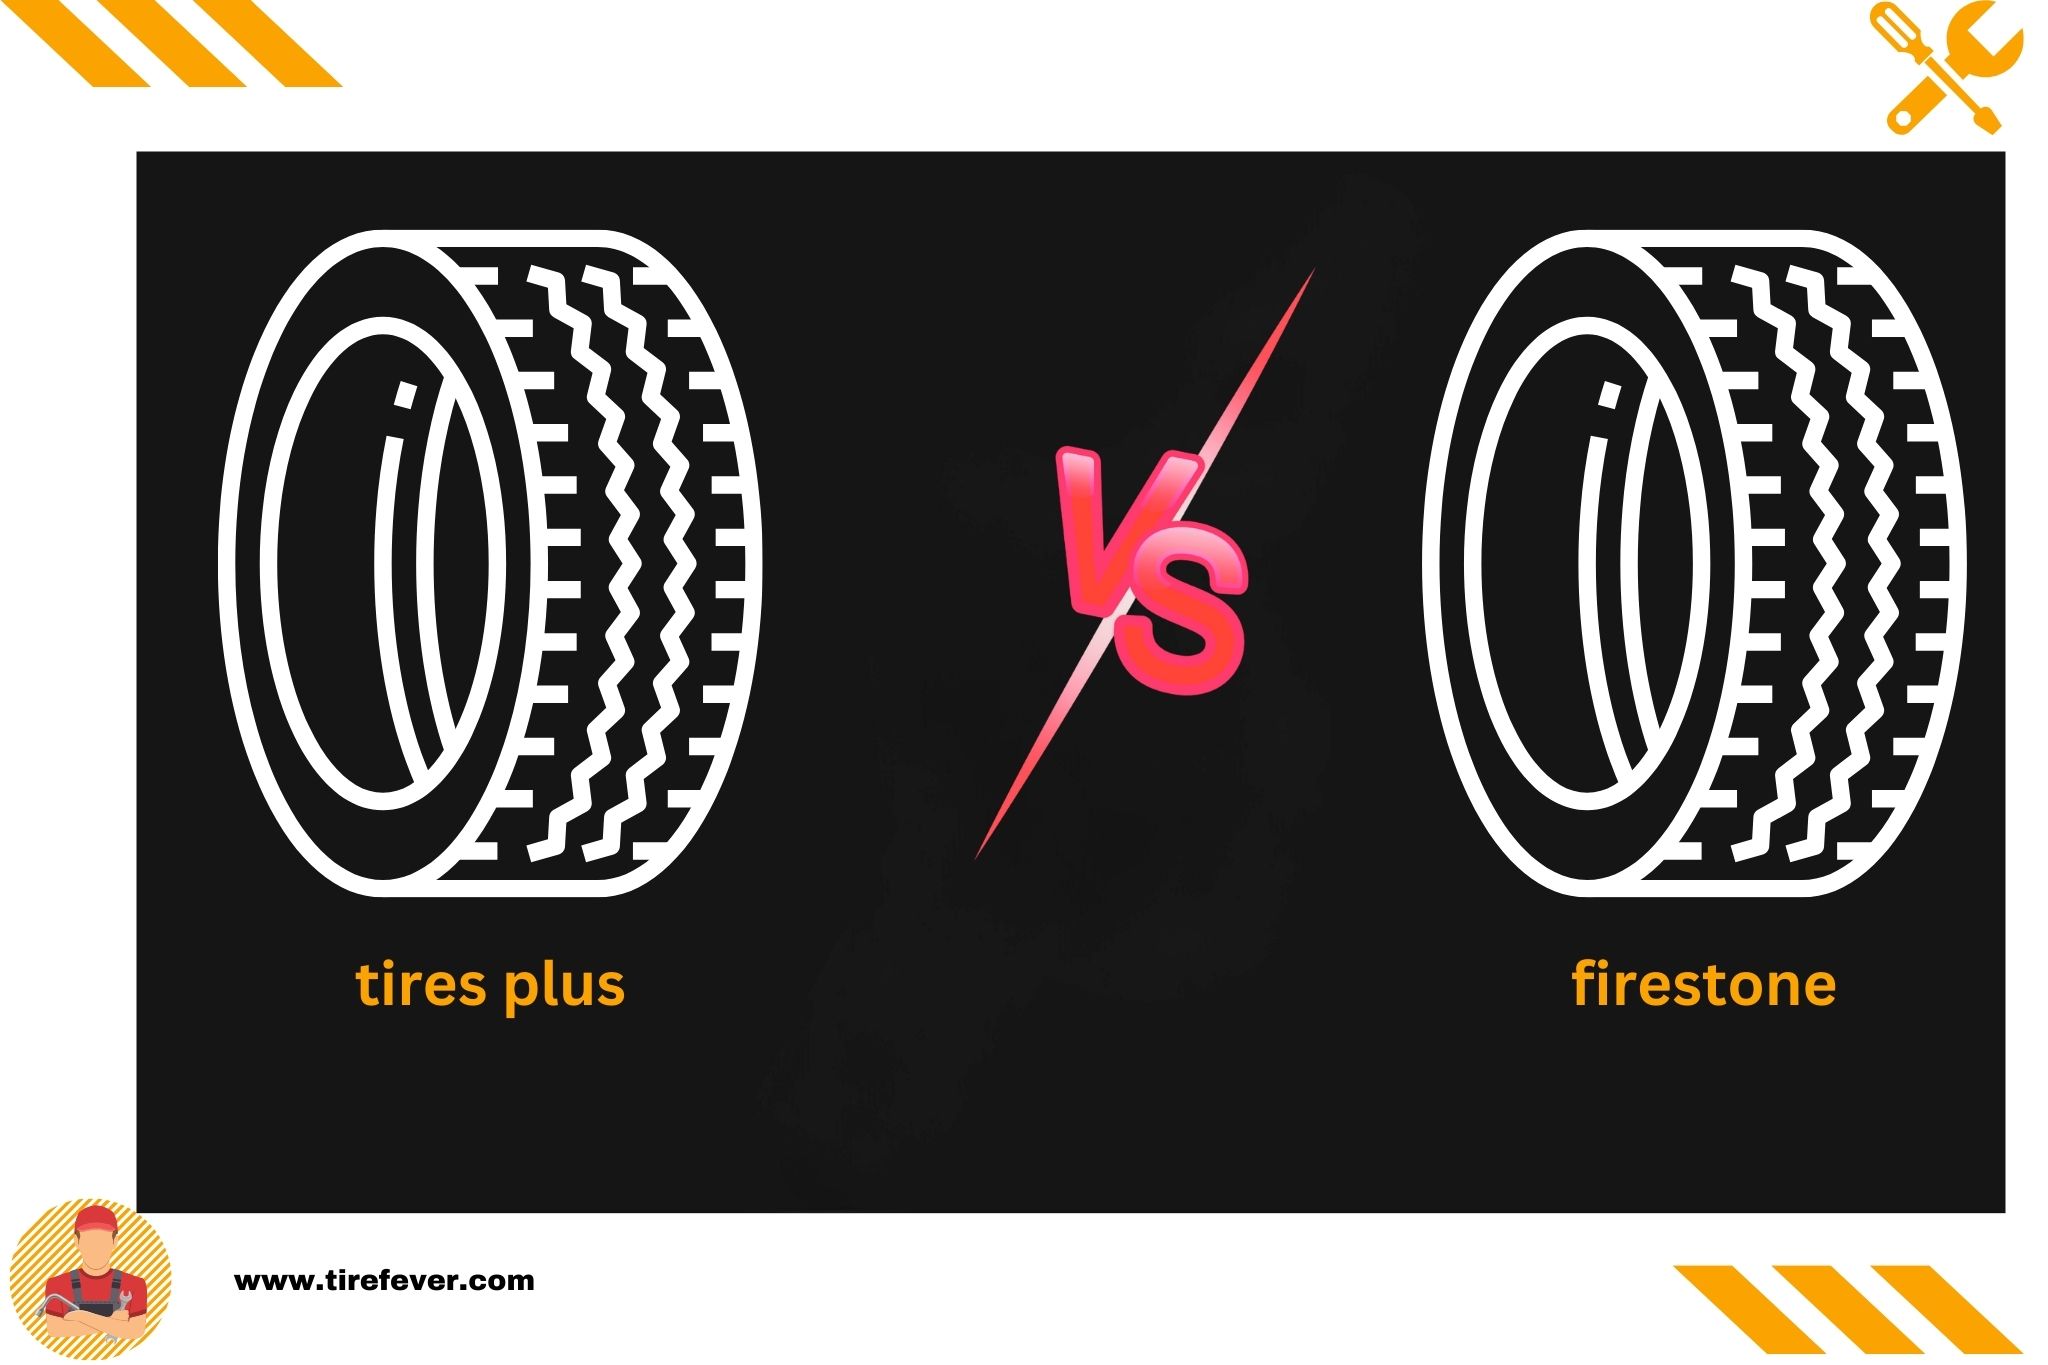 tires plus vs firestone